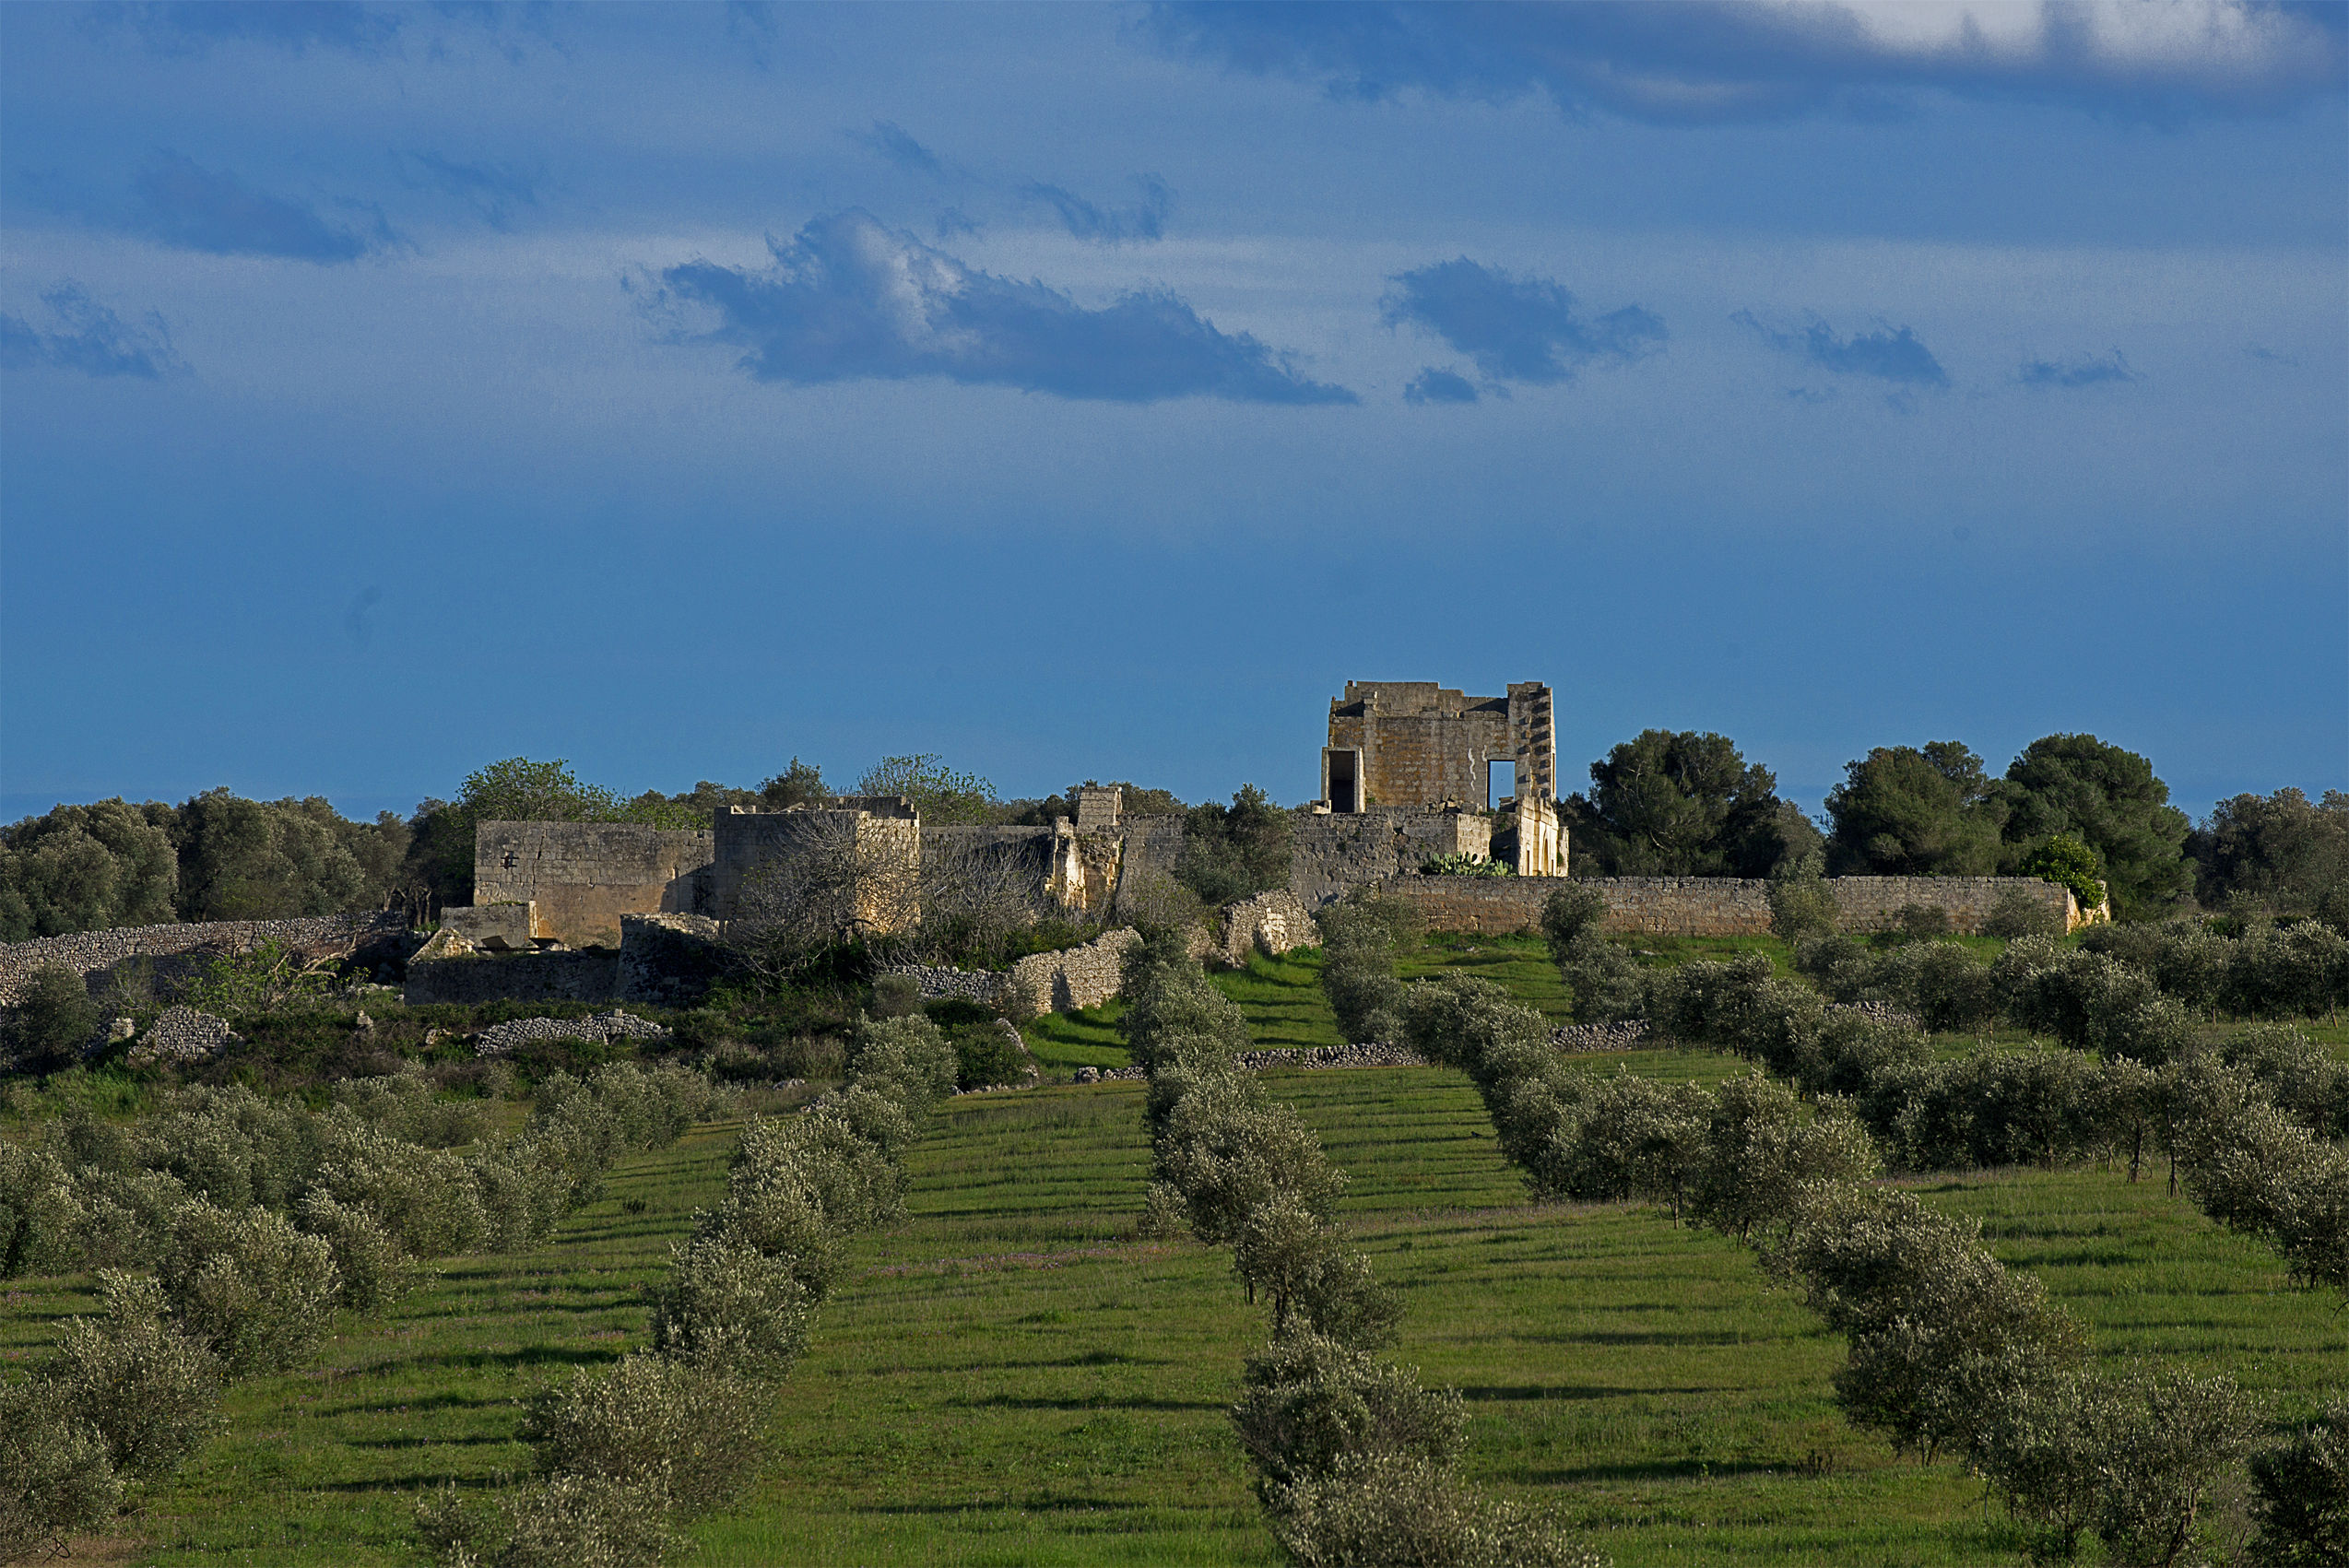 Masseria ruined landscape...